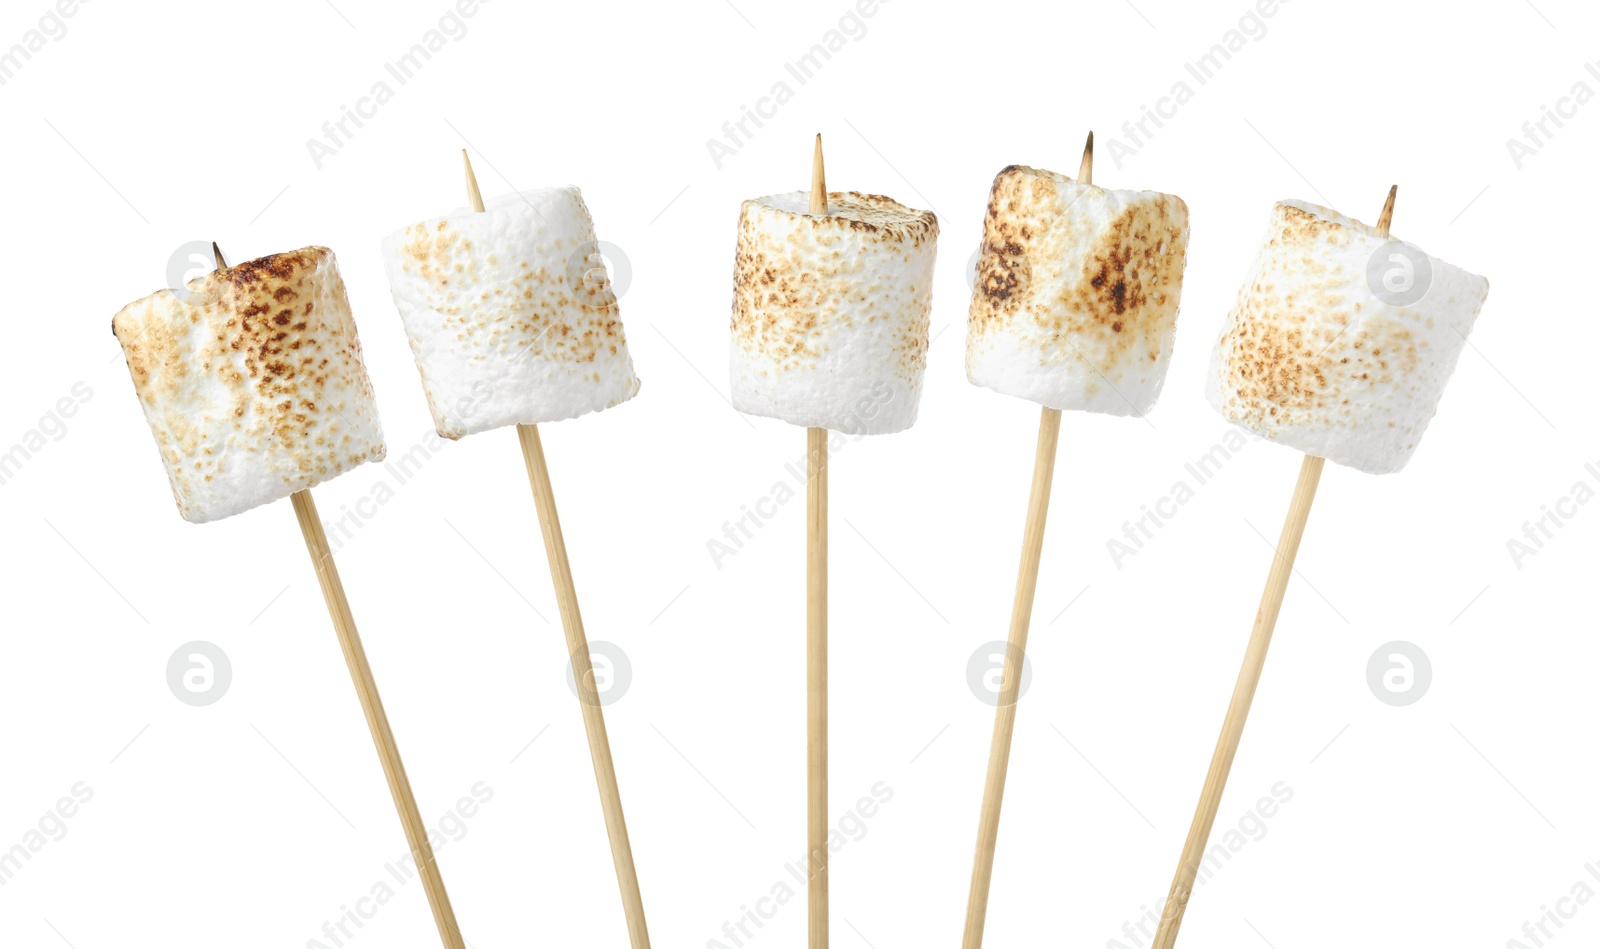 Photo of Sticks with roasted marshmallows on white background